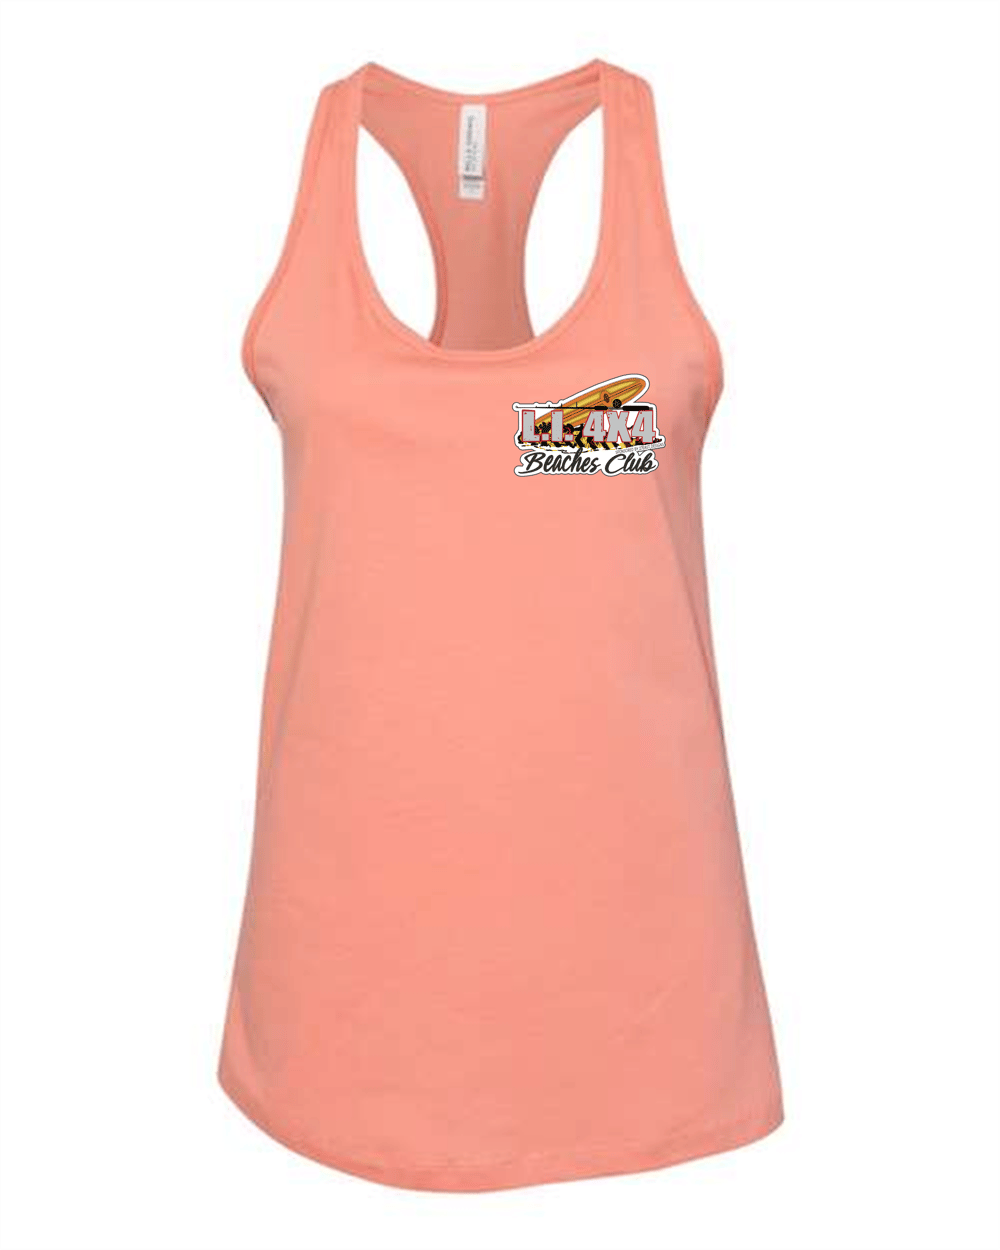 Image of Women's Club Tank Top- Sunset Orange